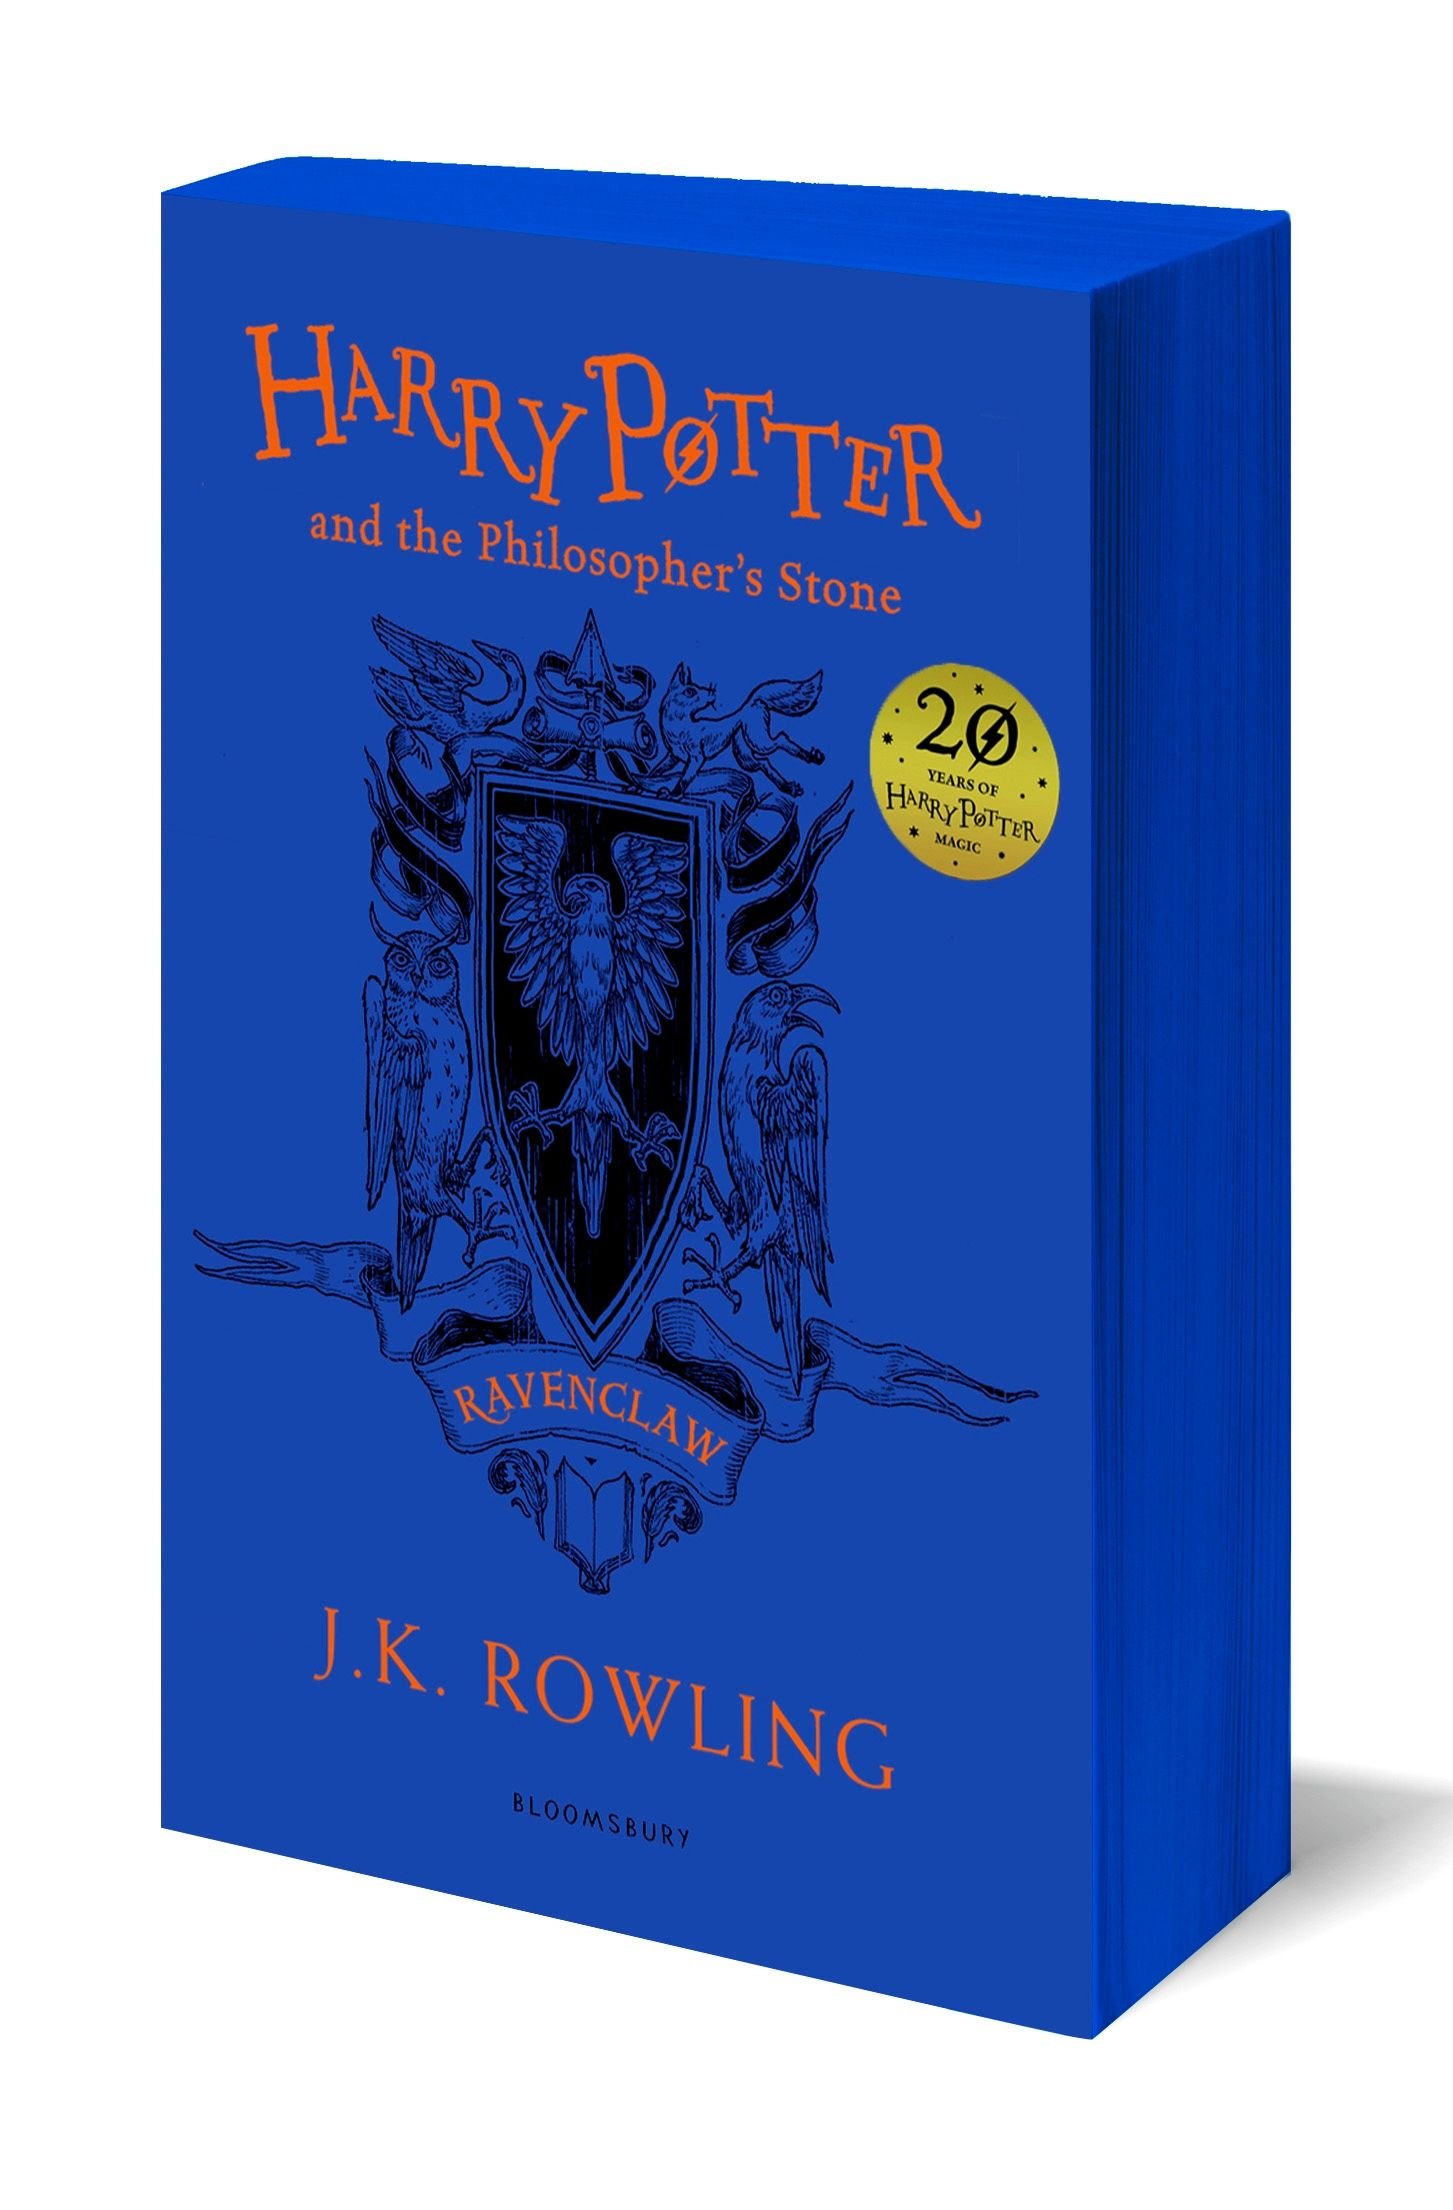 Harry potter ravenclaw magic